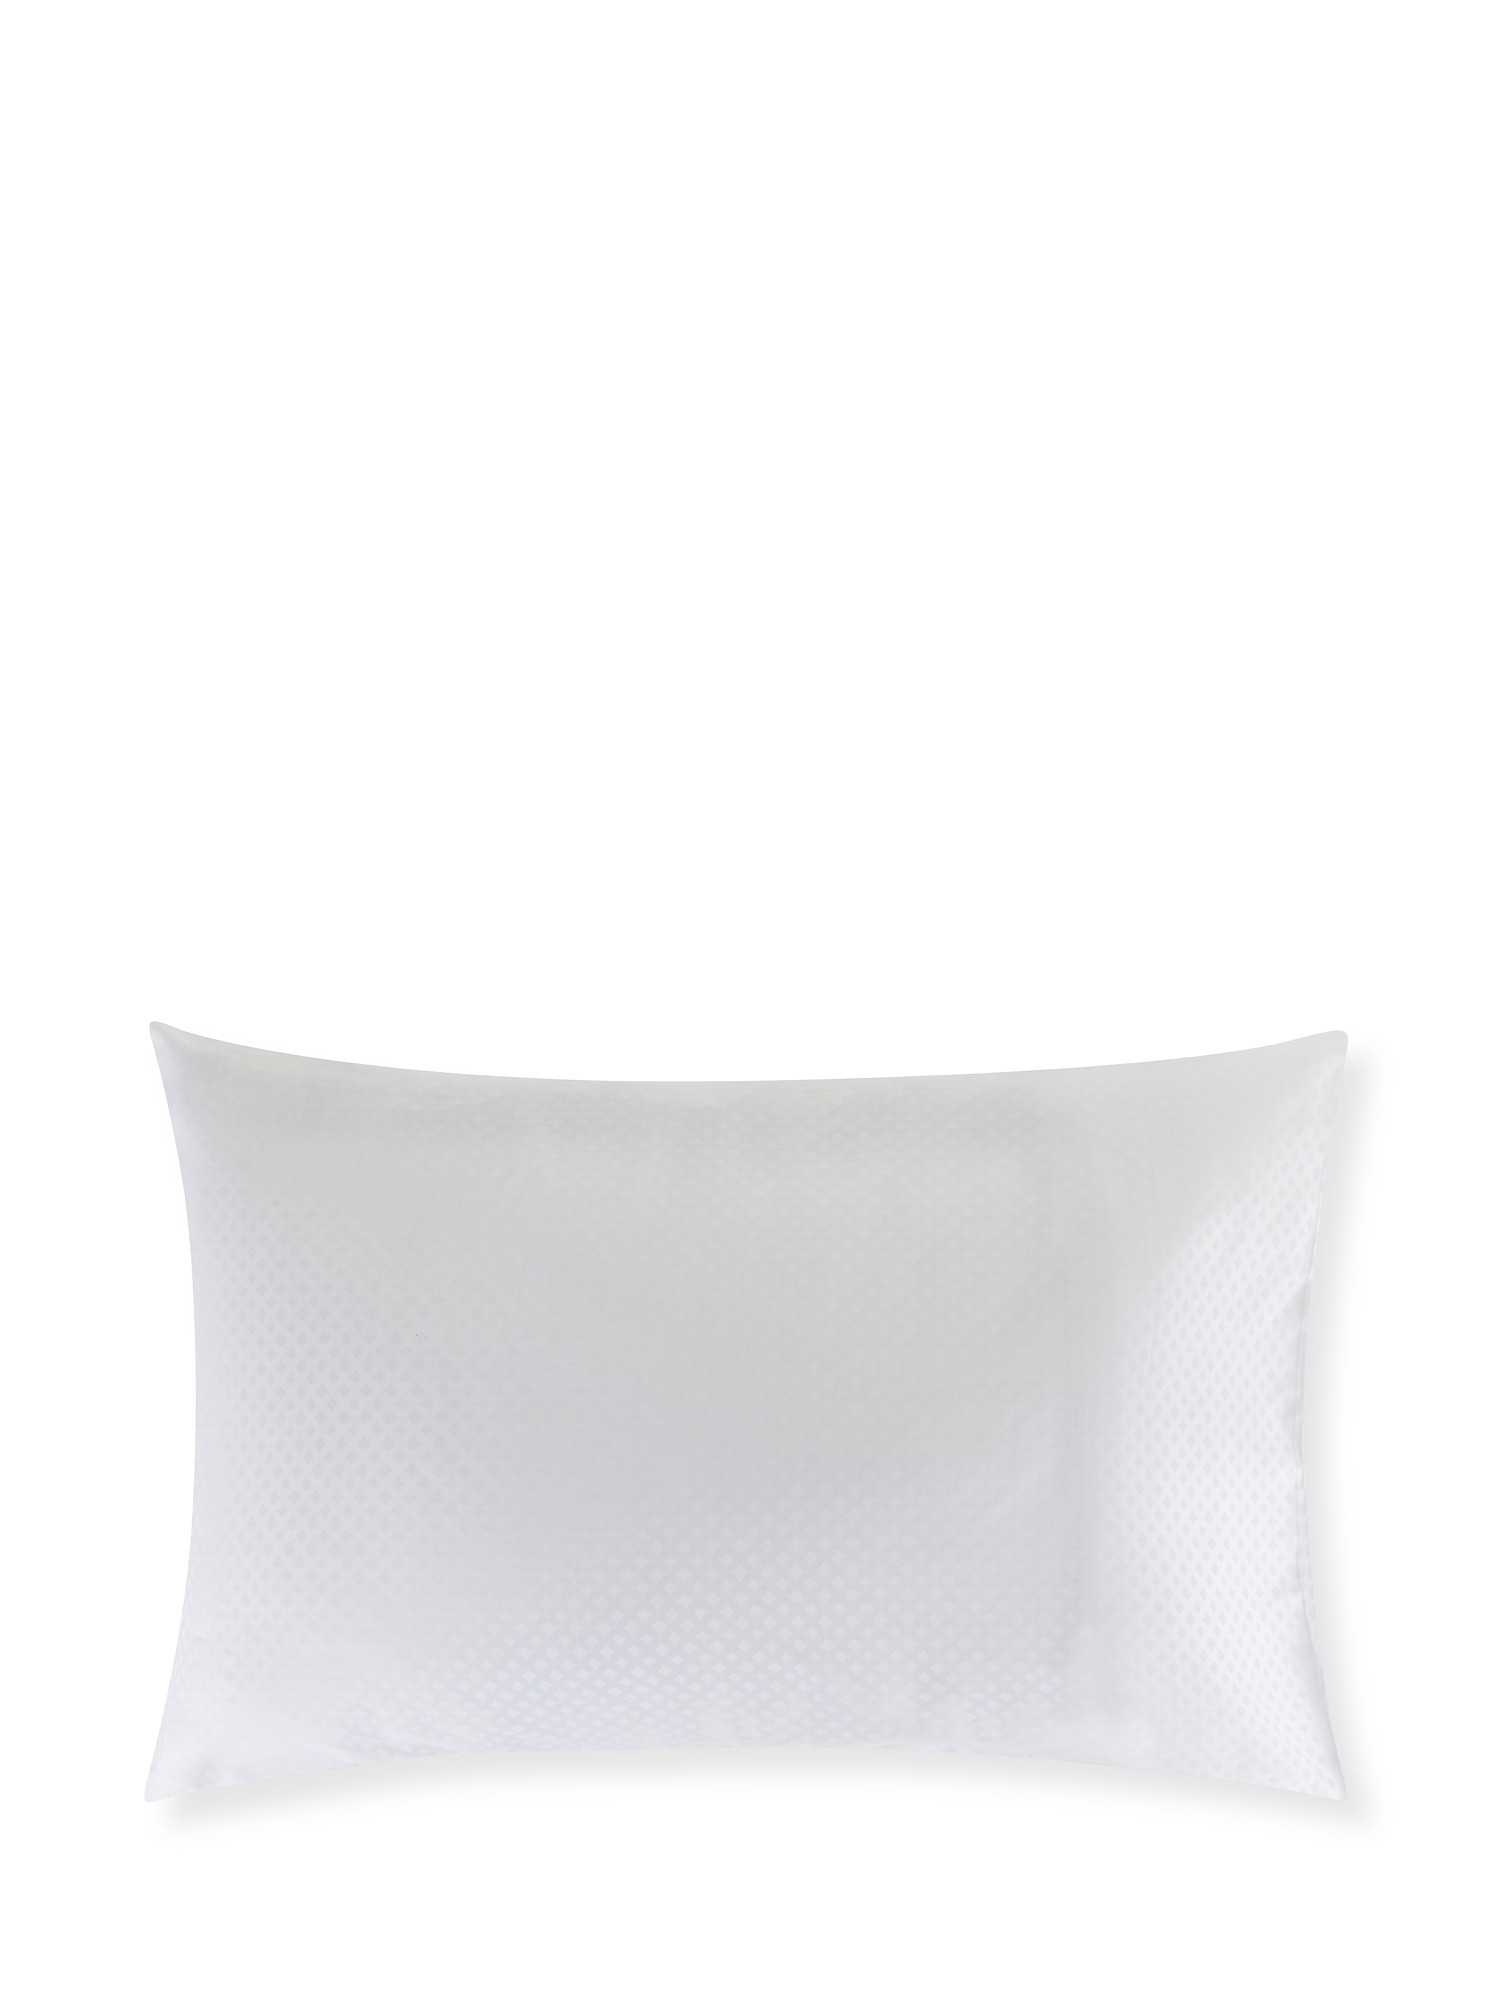 Portofino pillowcase in 100% cotton percale jacquard, White, large image number 0